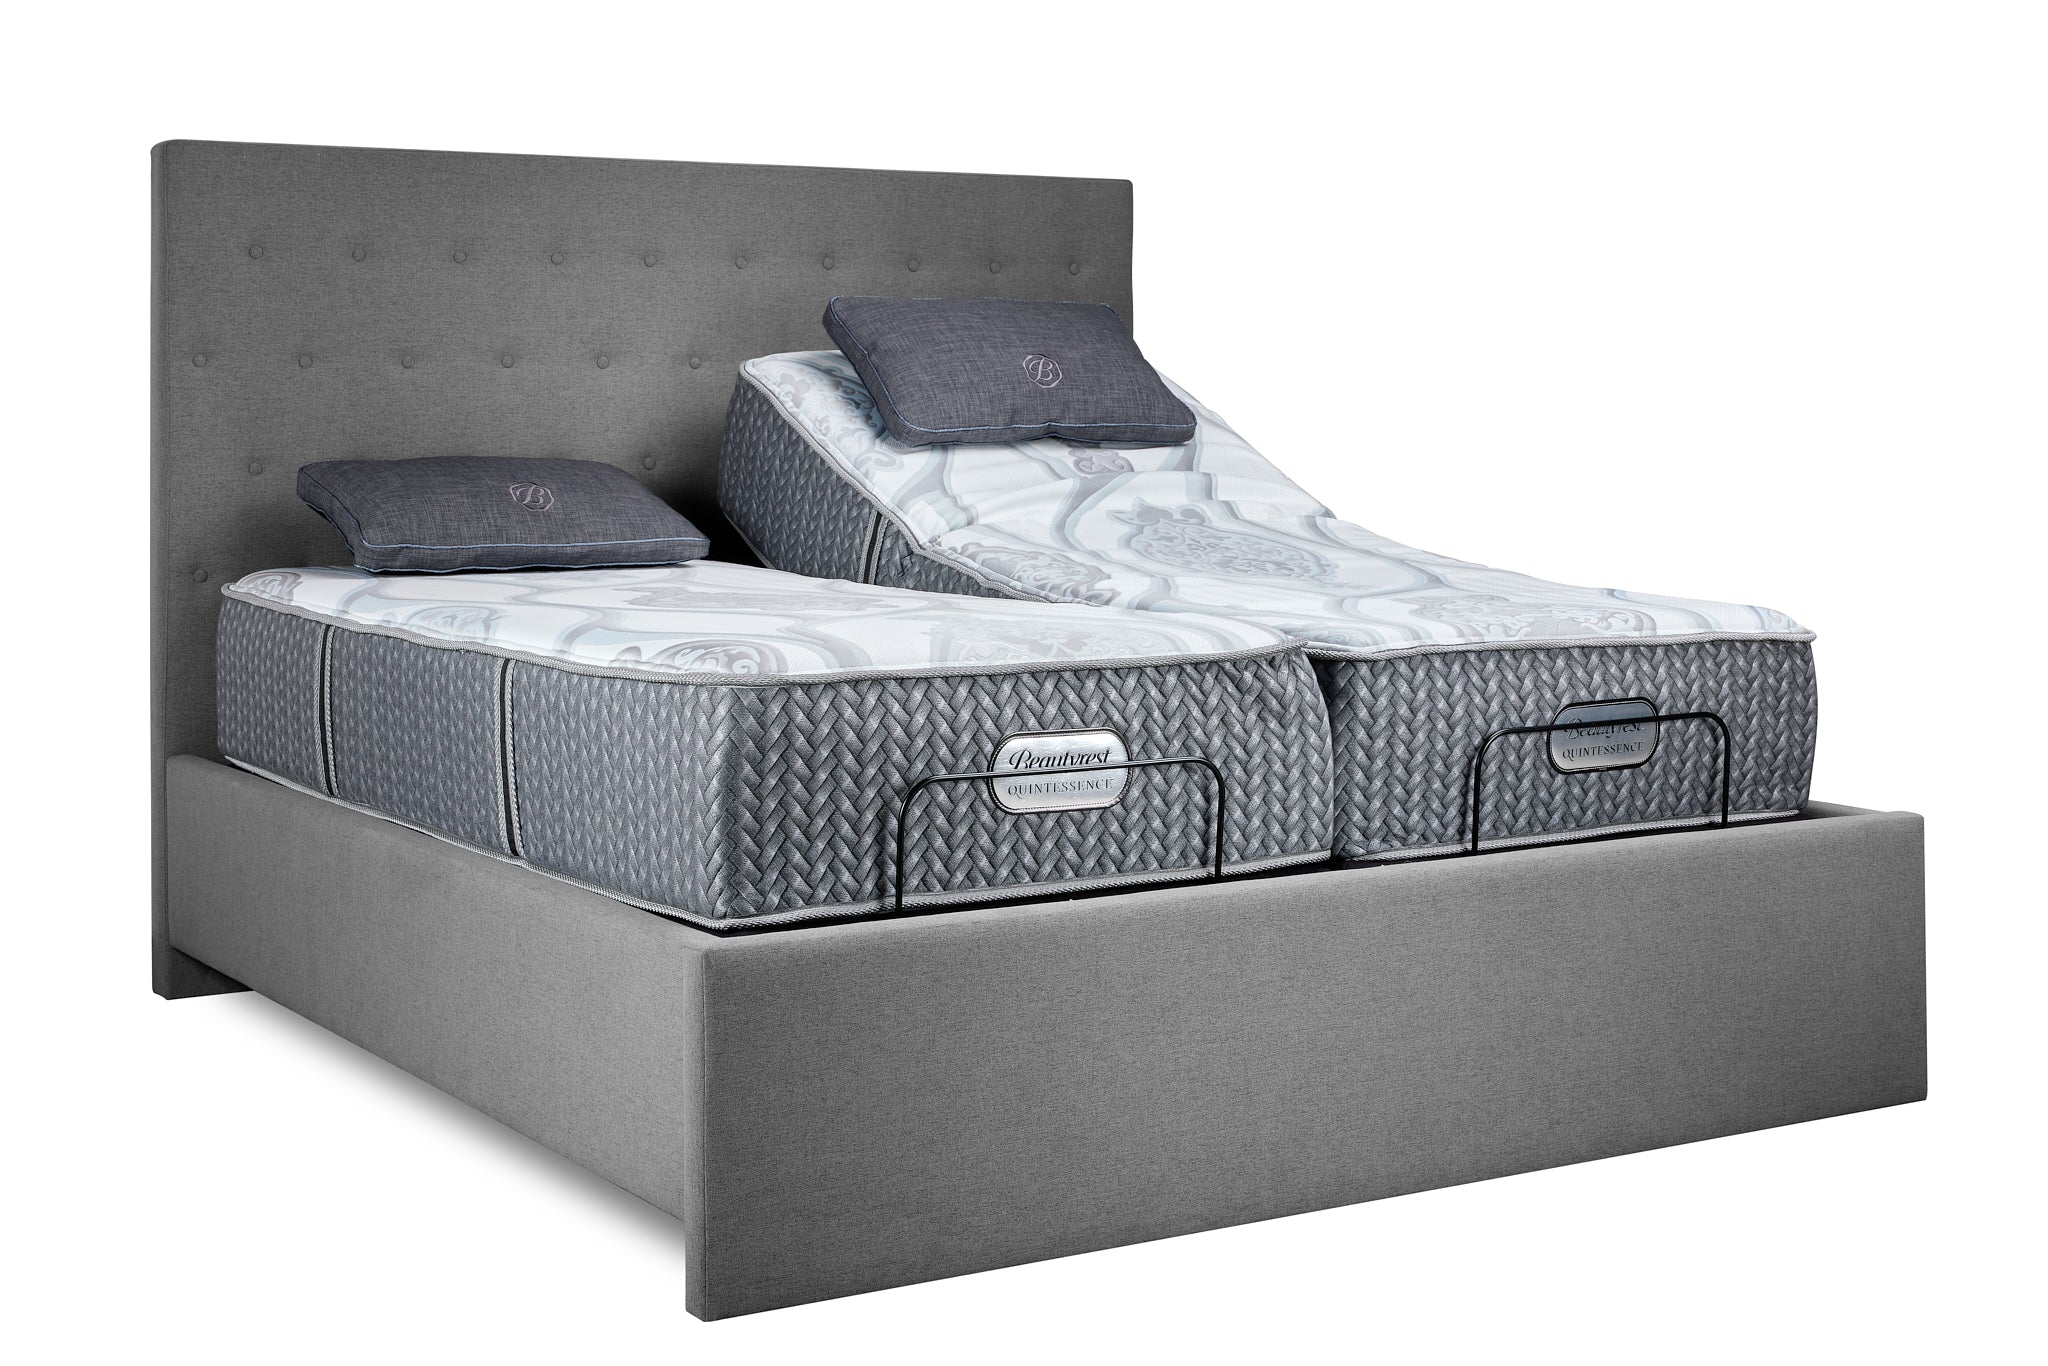 Beautyrest Quintessence Platinum Split King Adjustable Bed